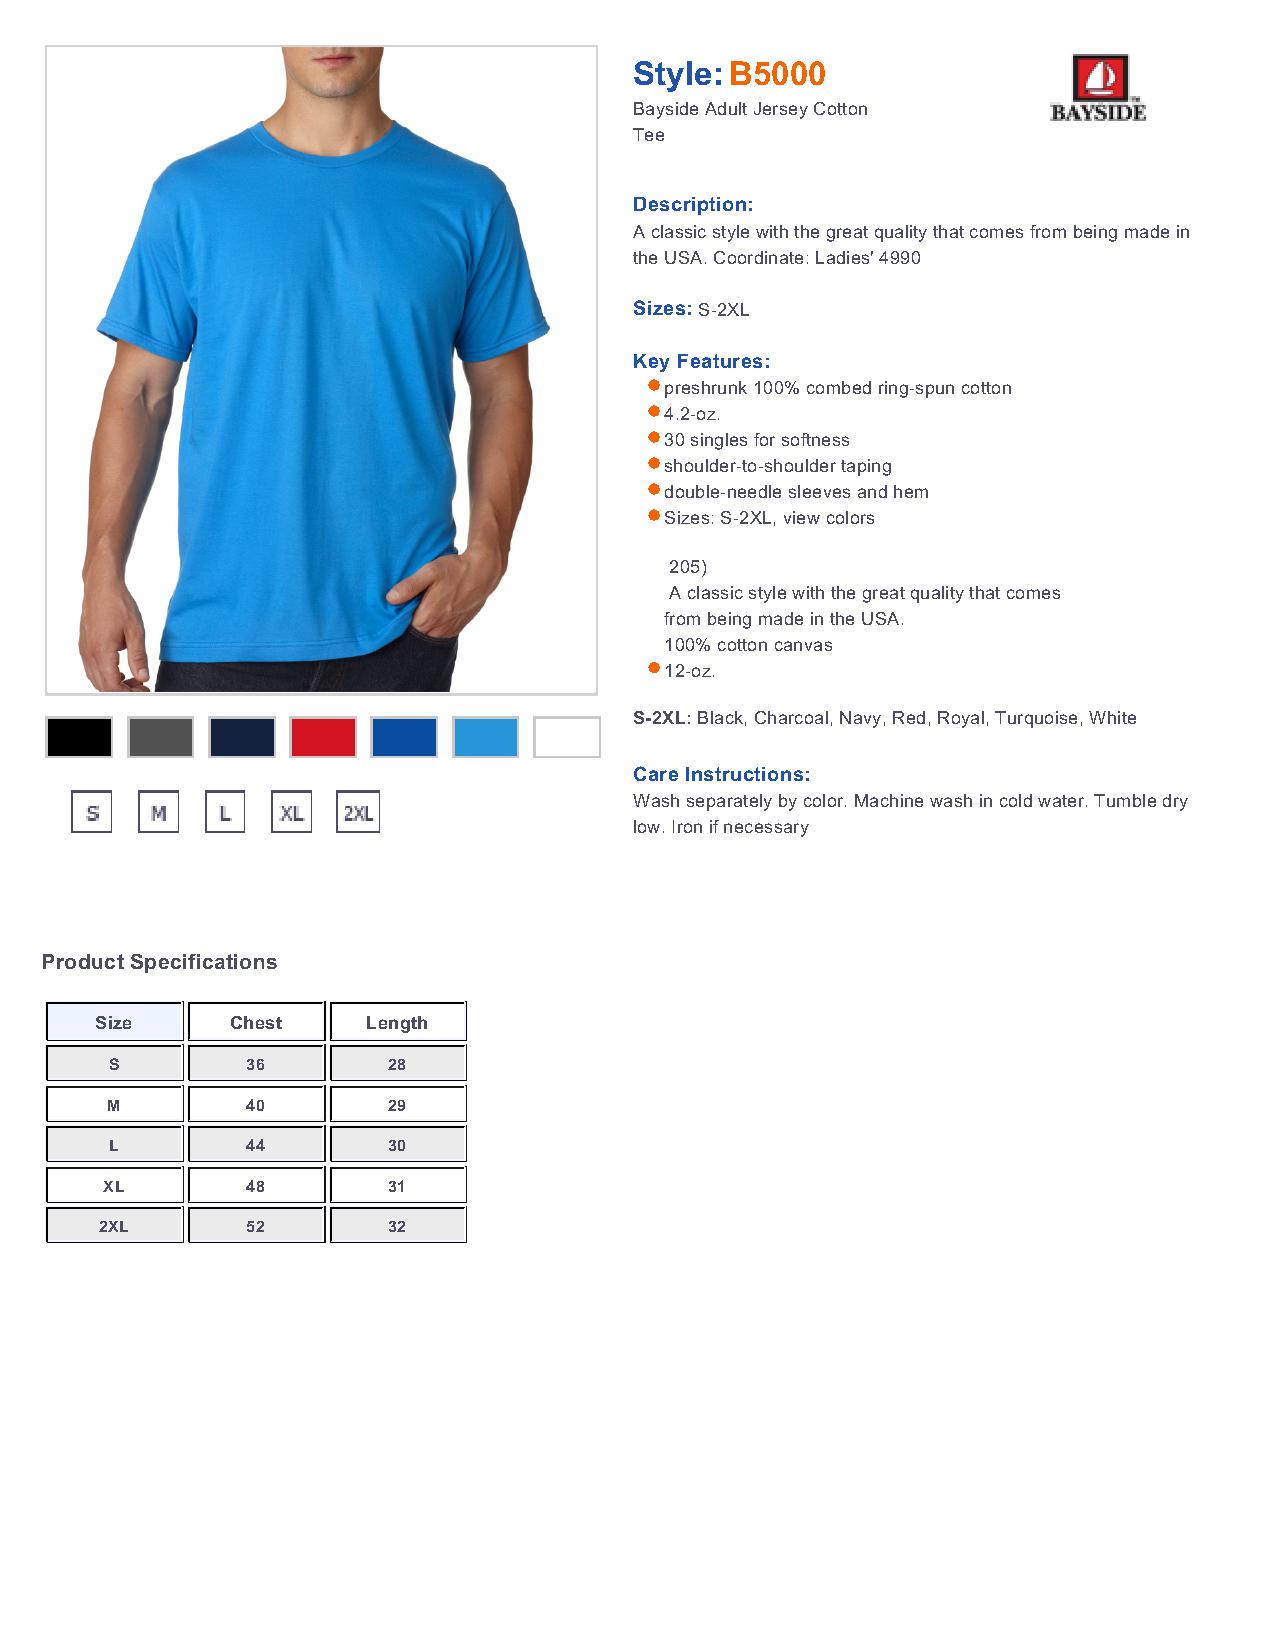 Bayside B5000 - Adult Jersey Tee $6.11 - T-Shirts